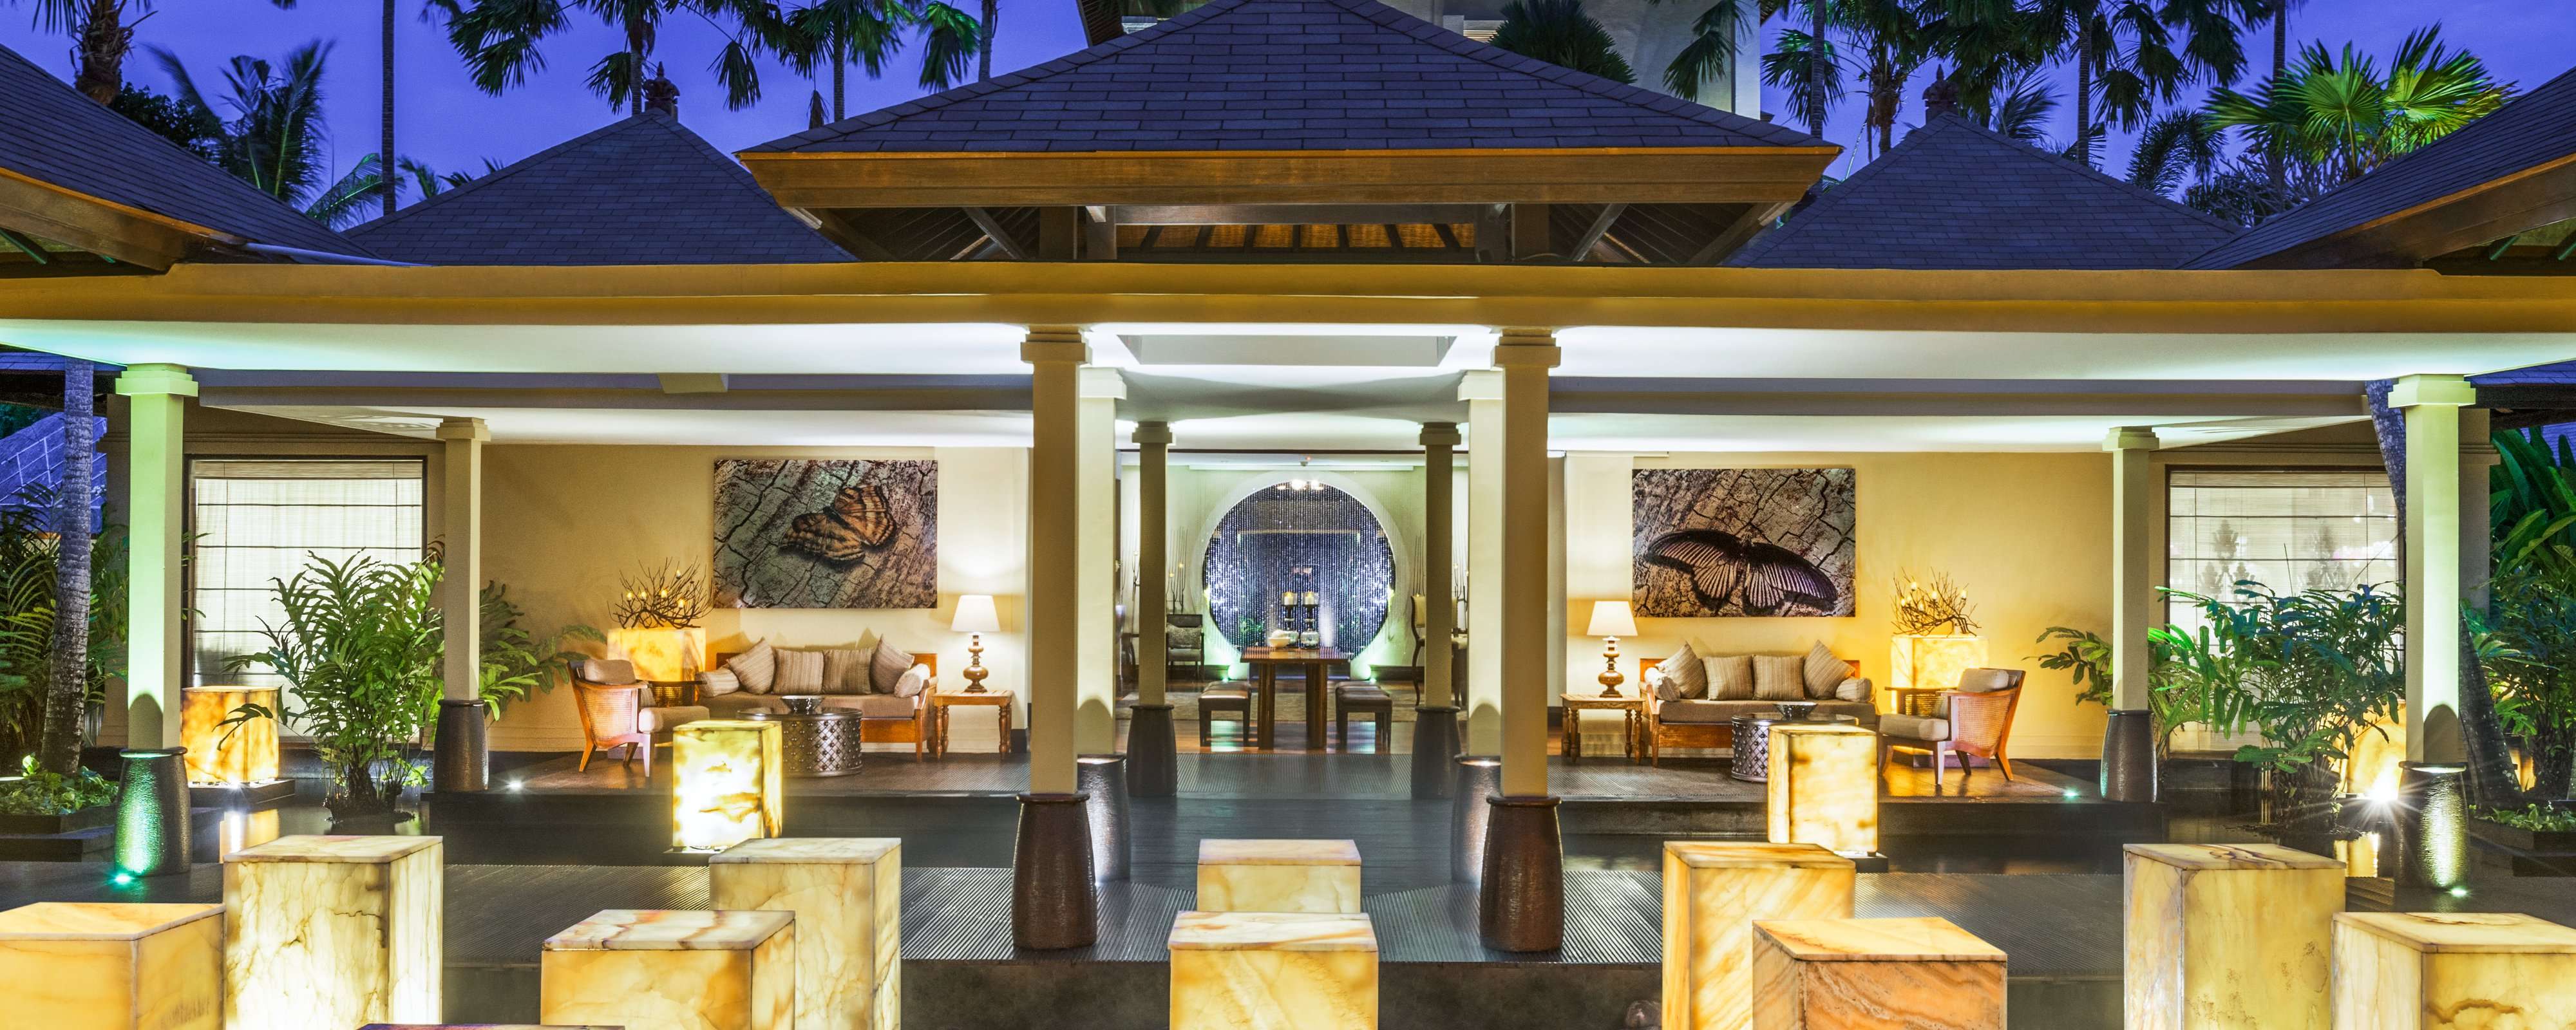 Hotel Fact Sheet (English) by The St. Regis Bali Resort - Issuu